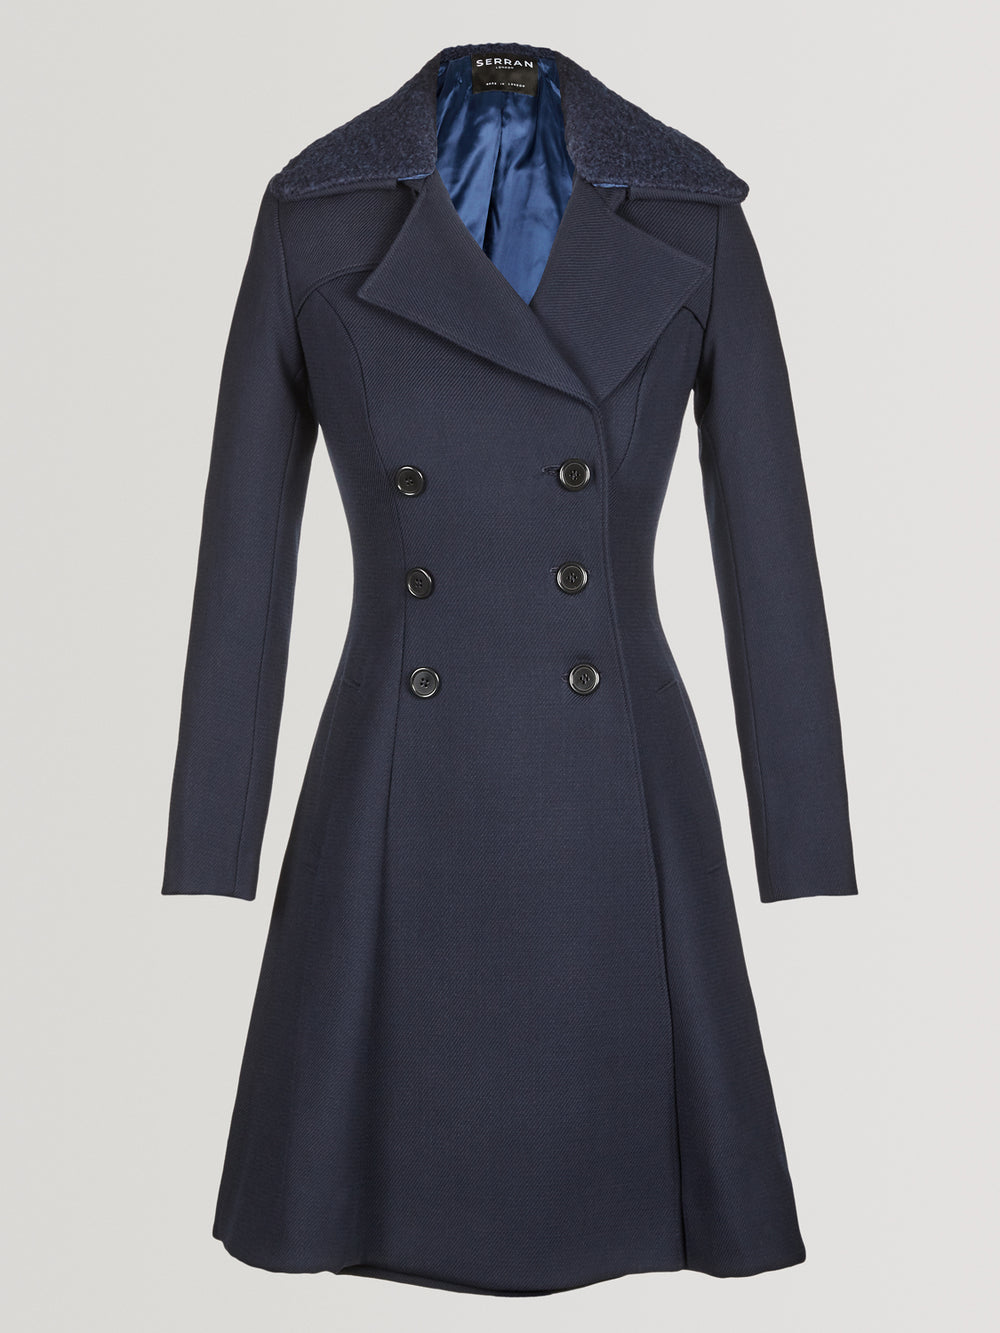 Serran® Official Site | Premium Coats & Knitwear | London